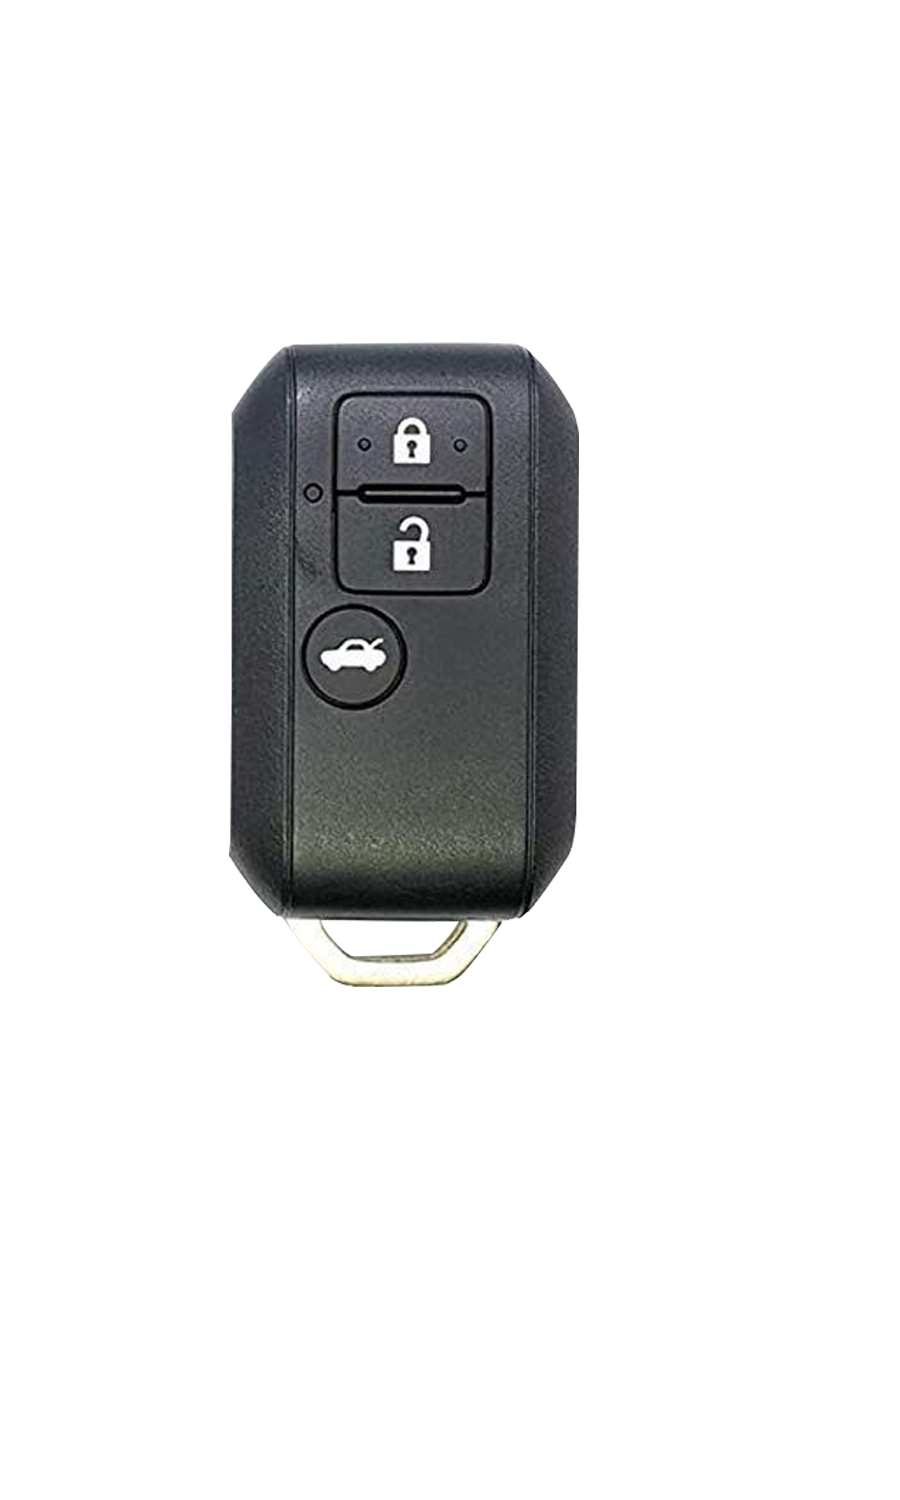 Acto Car Key Cover TPU Leather Grain With Key Chain For Suzuki New Ertiga